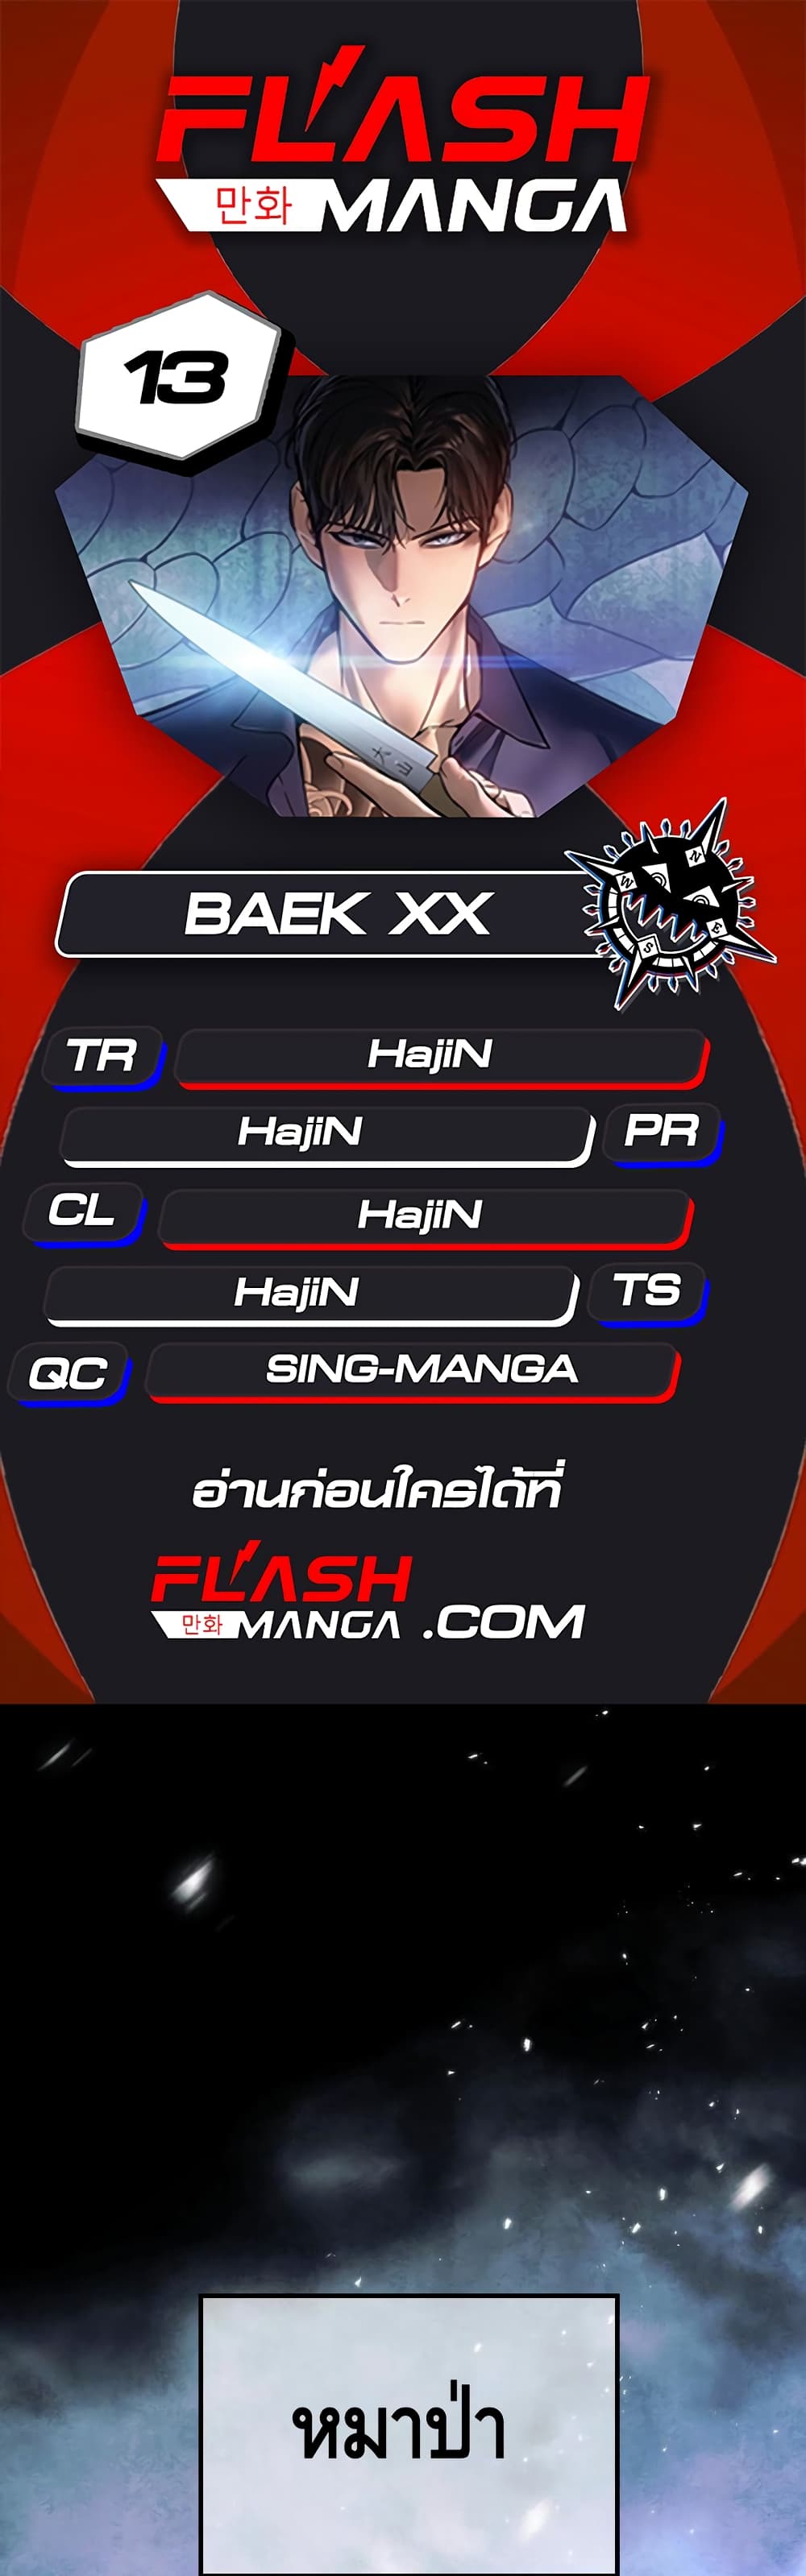 BaekXX 13-13